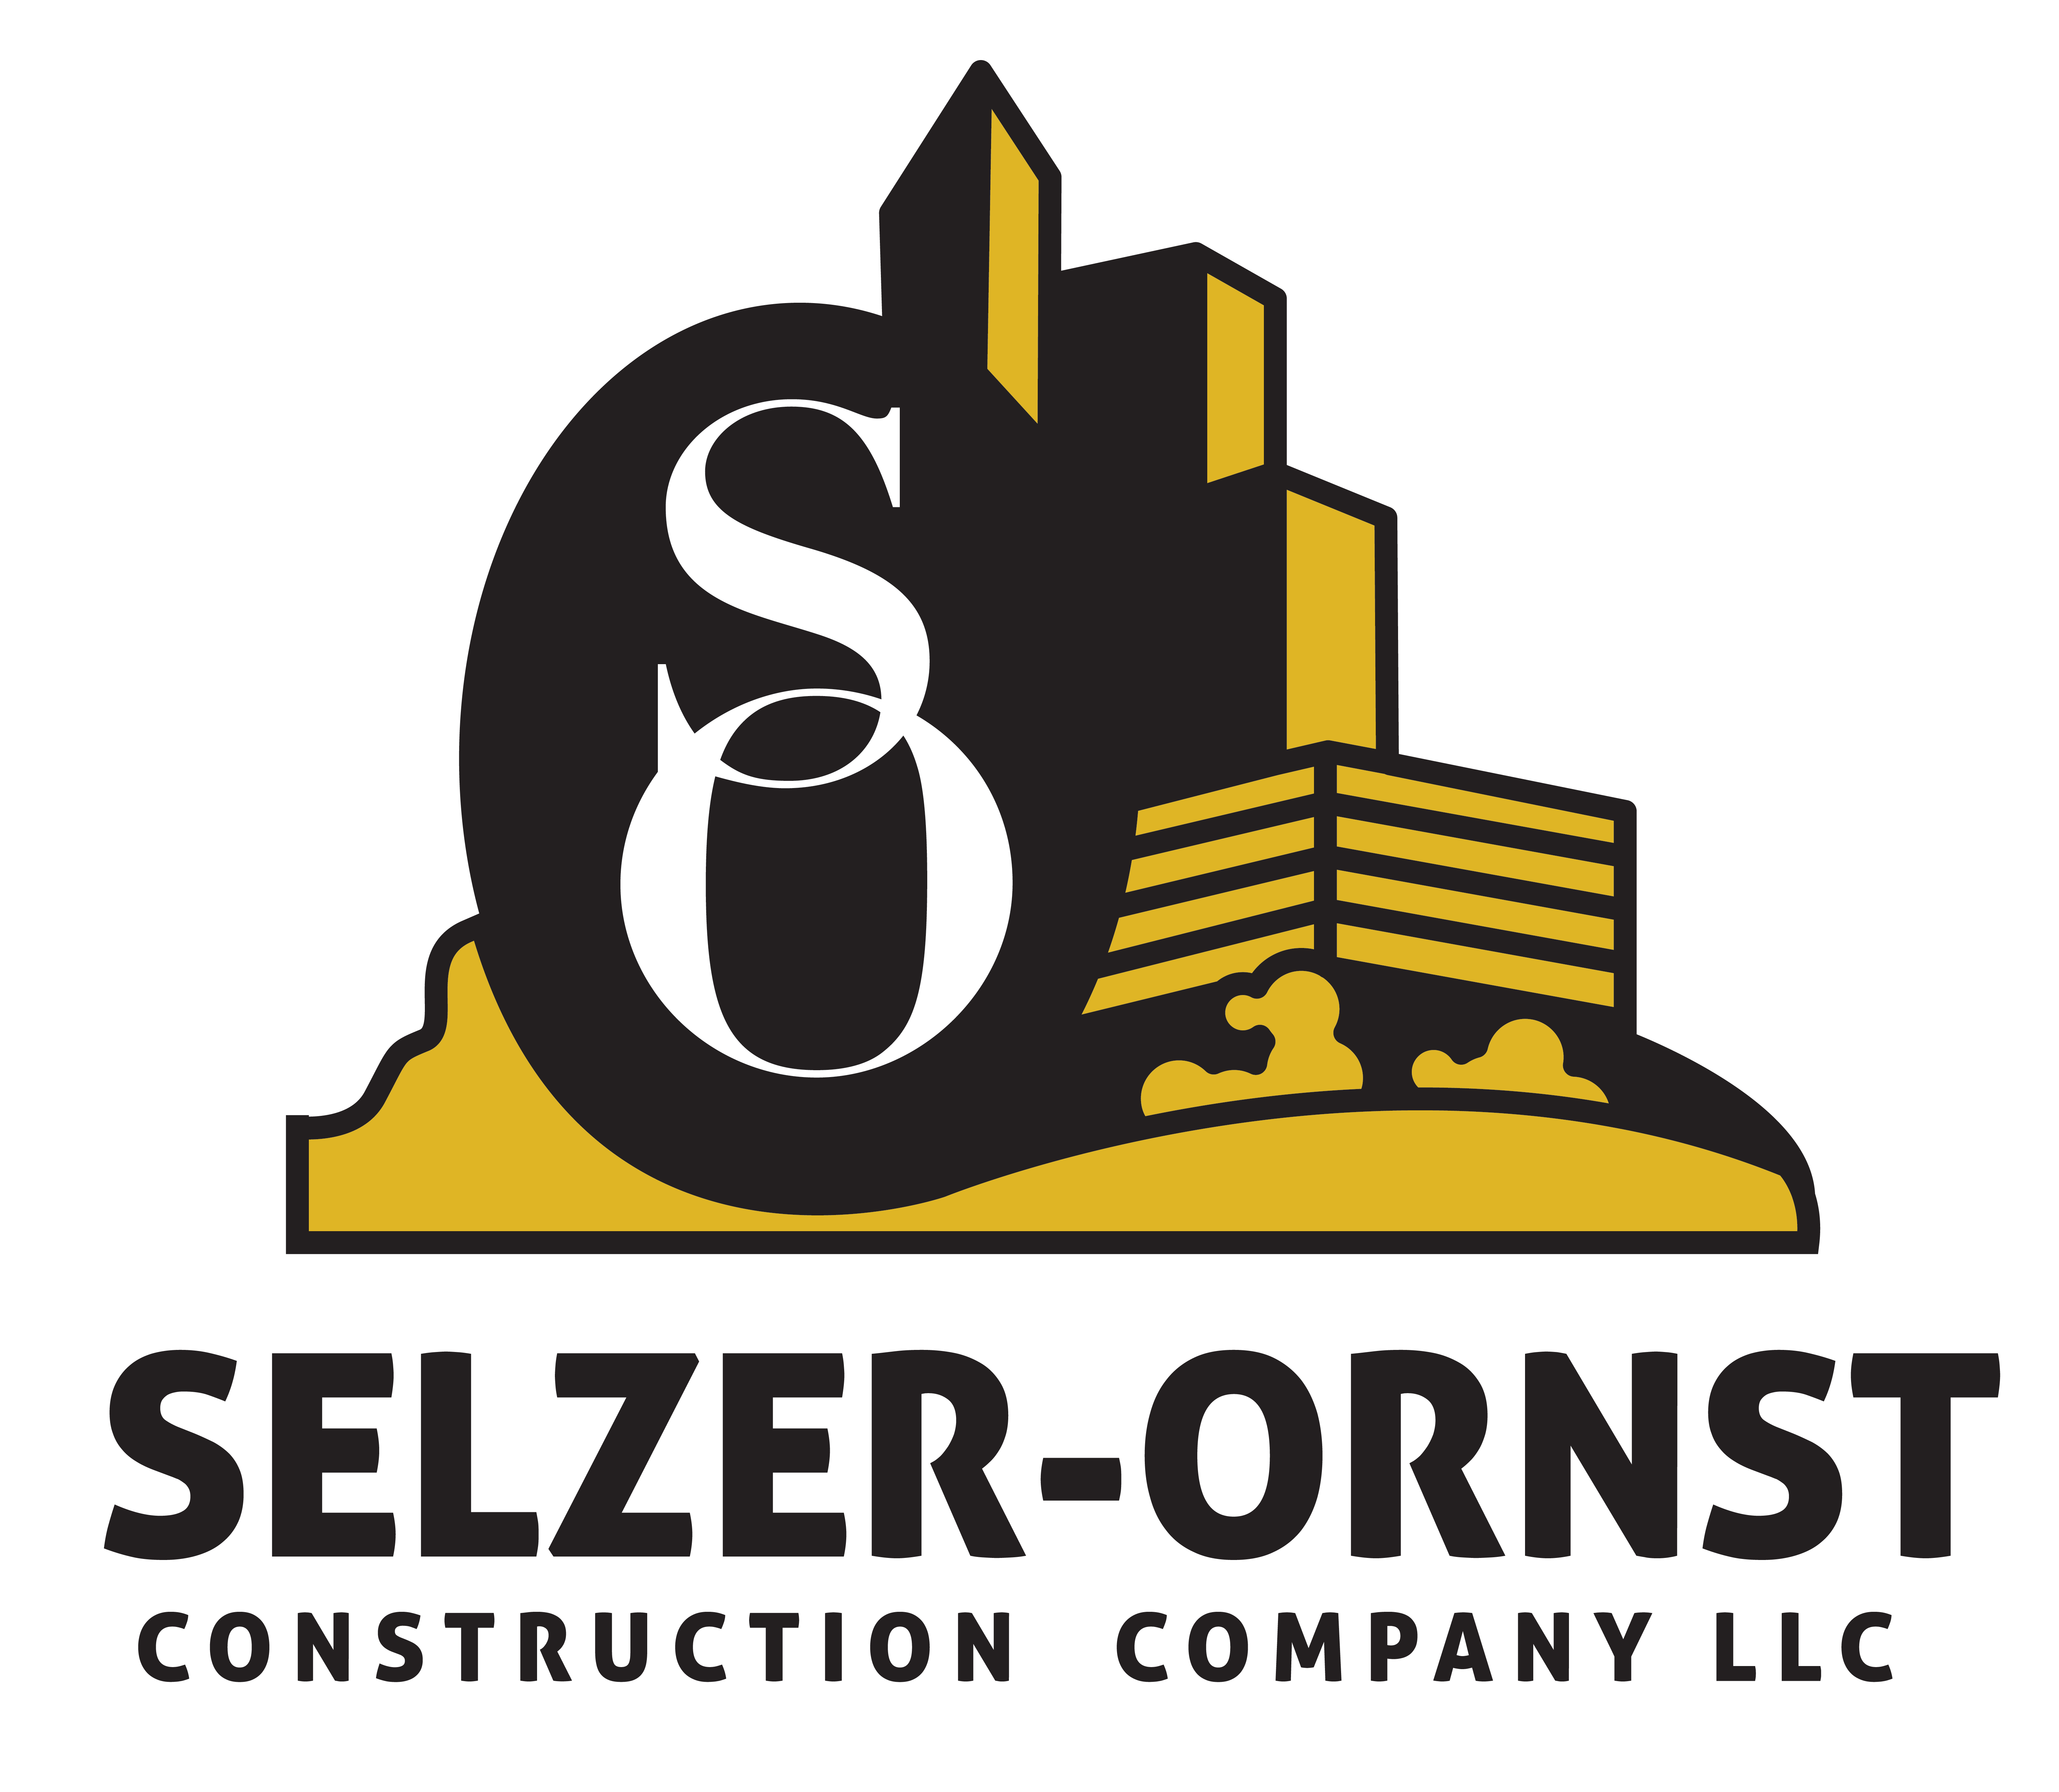 Selzer-Ornst Company